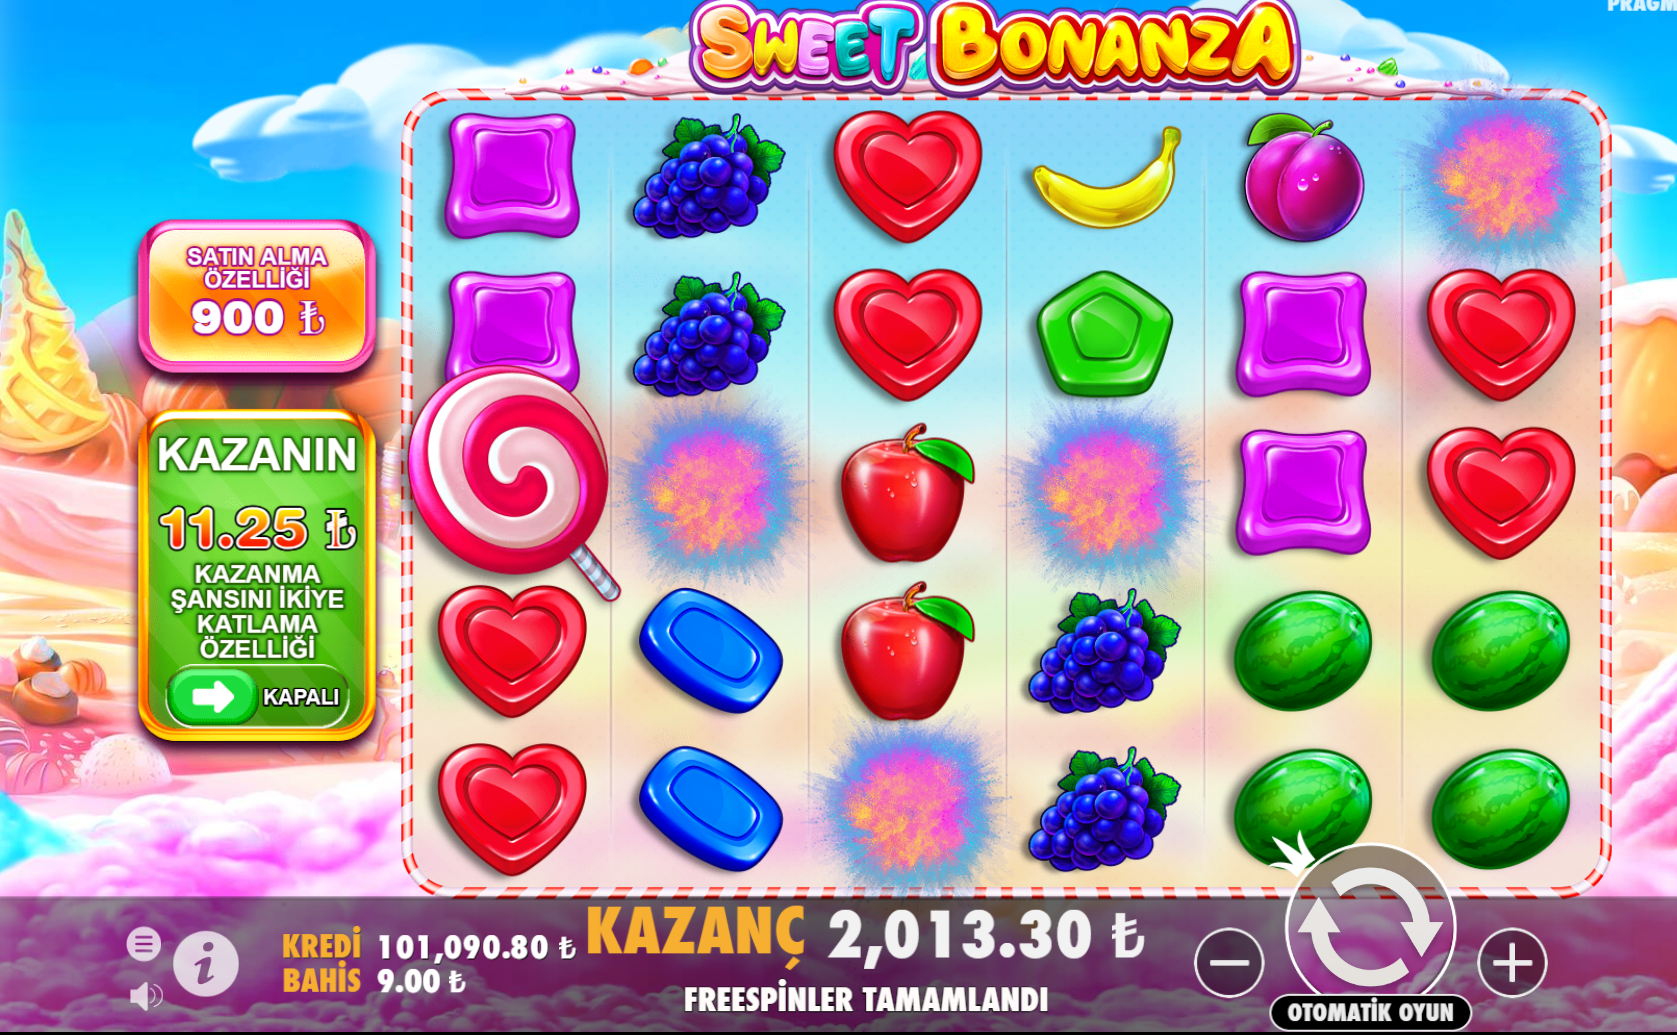 Sweet Bonanza Hangi Sağlayıcıda Oynanır?